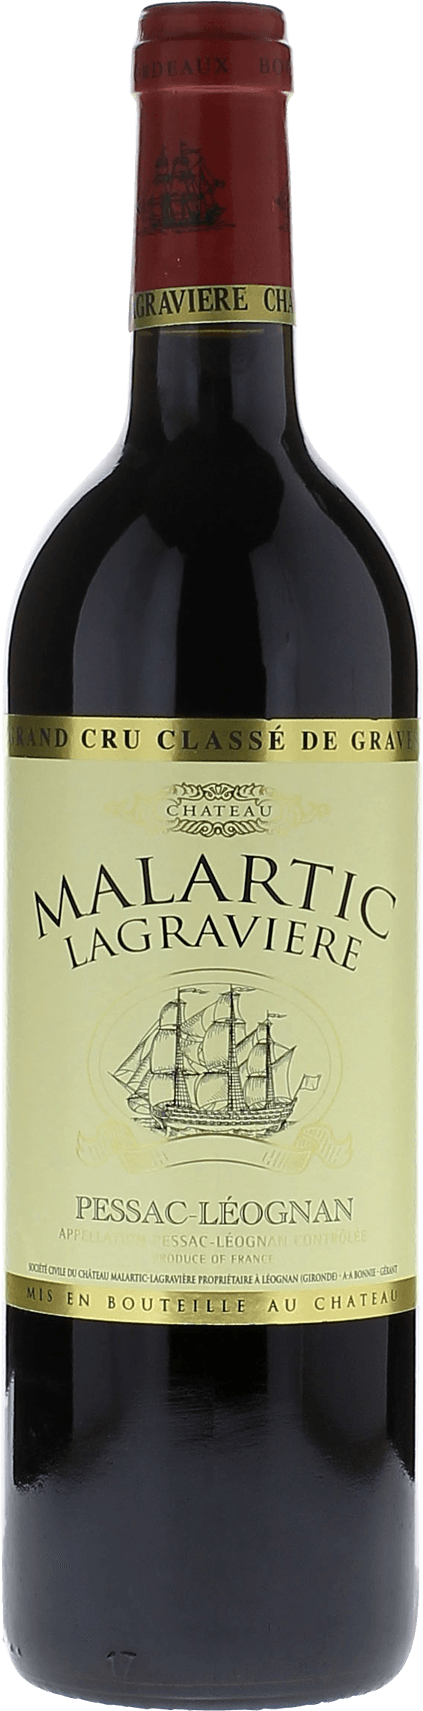 Malartic lagraviere rouge 2010 Grand Cru Class Graves, Bordeaux rouge